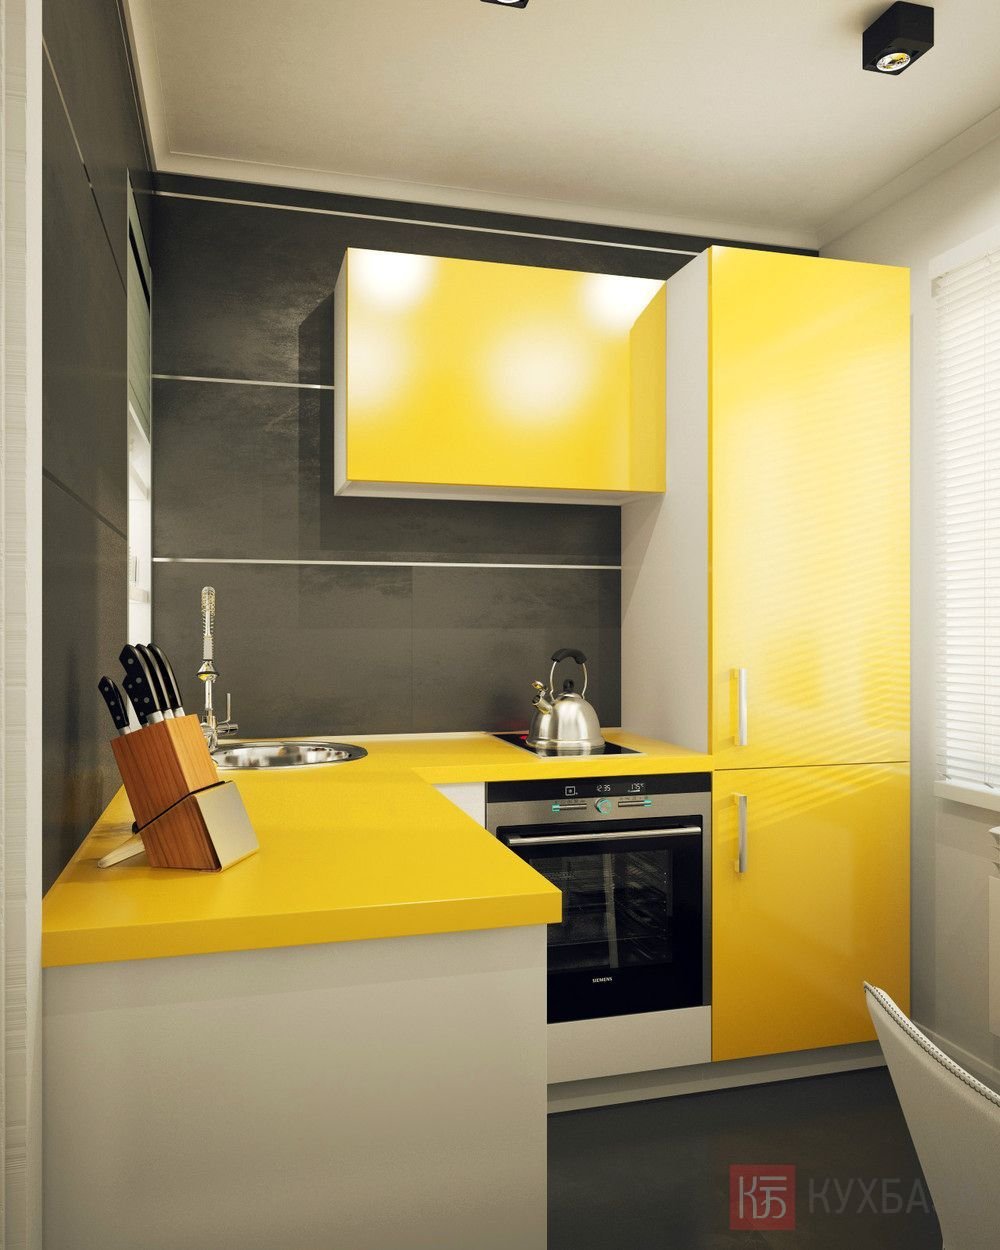 Ремонт кухни 5 метров. Интерьер маленькой кухни. Желтый кухонный гарнитур. Планировка маленькой кухни. Кухня в желтом стиле.